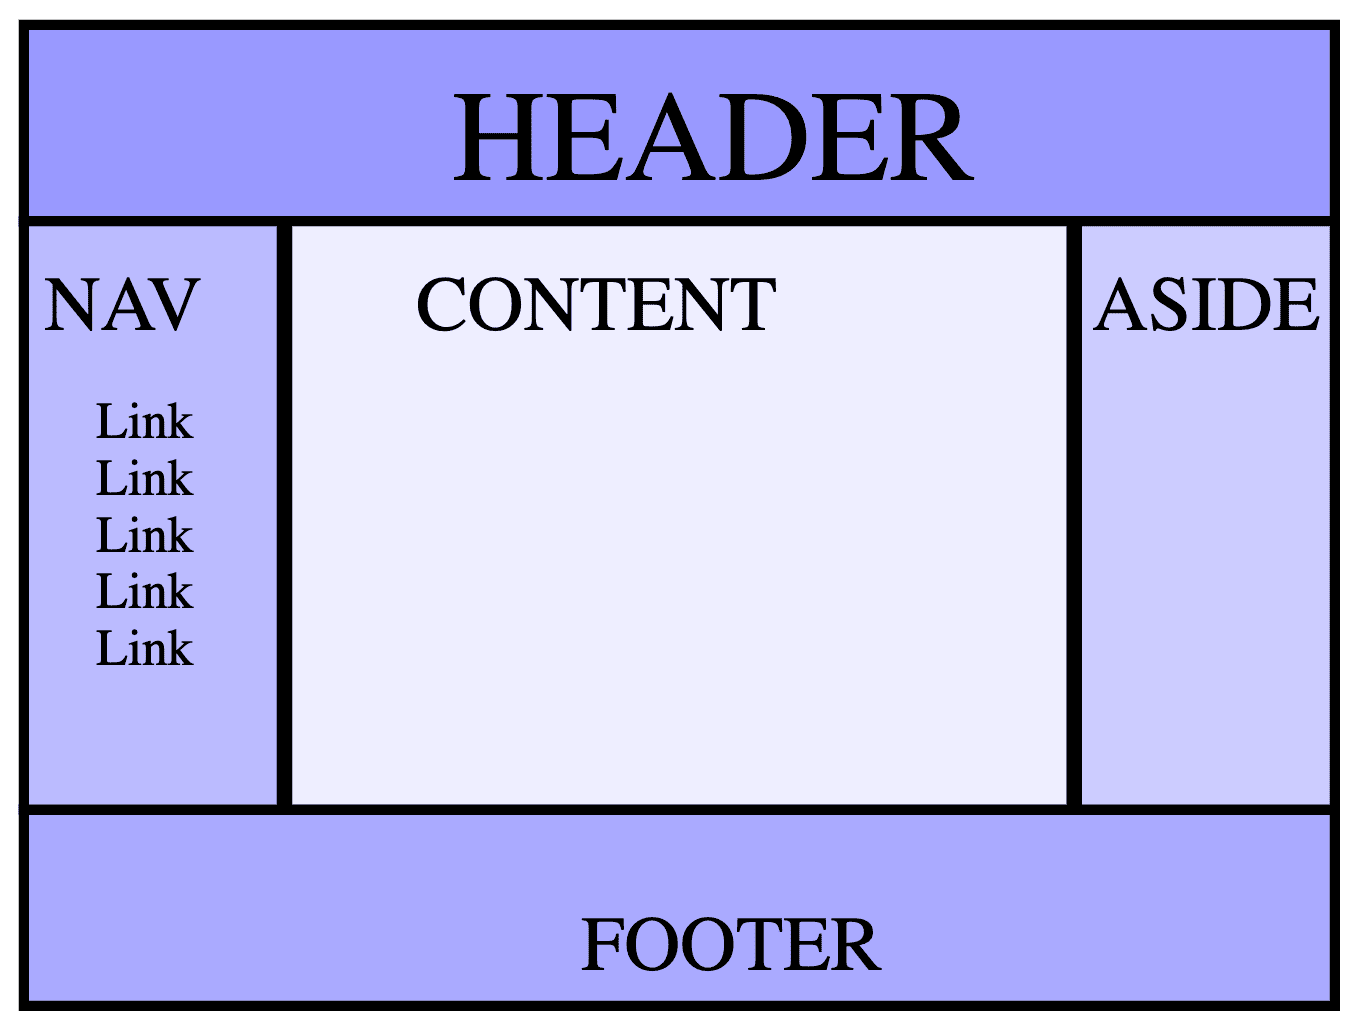 Tata letak dengan {i>header<i}, tiga kolom, dan {i>footer<i}.